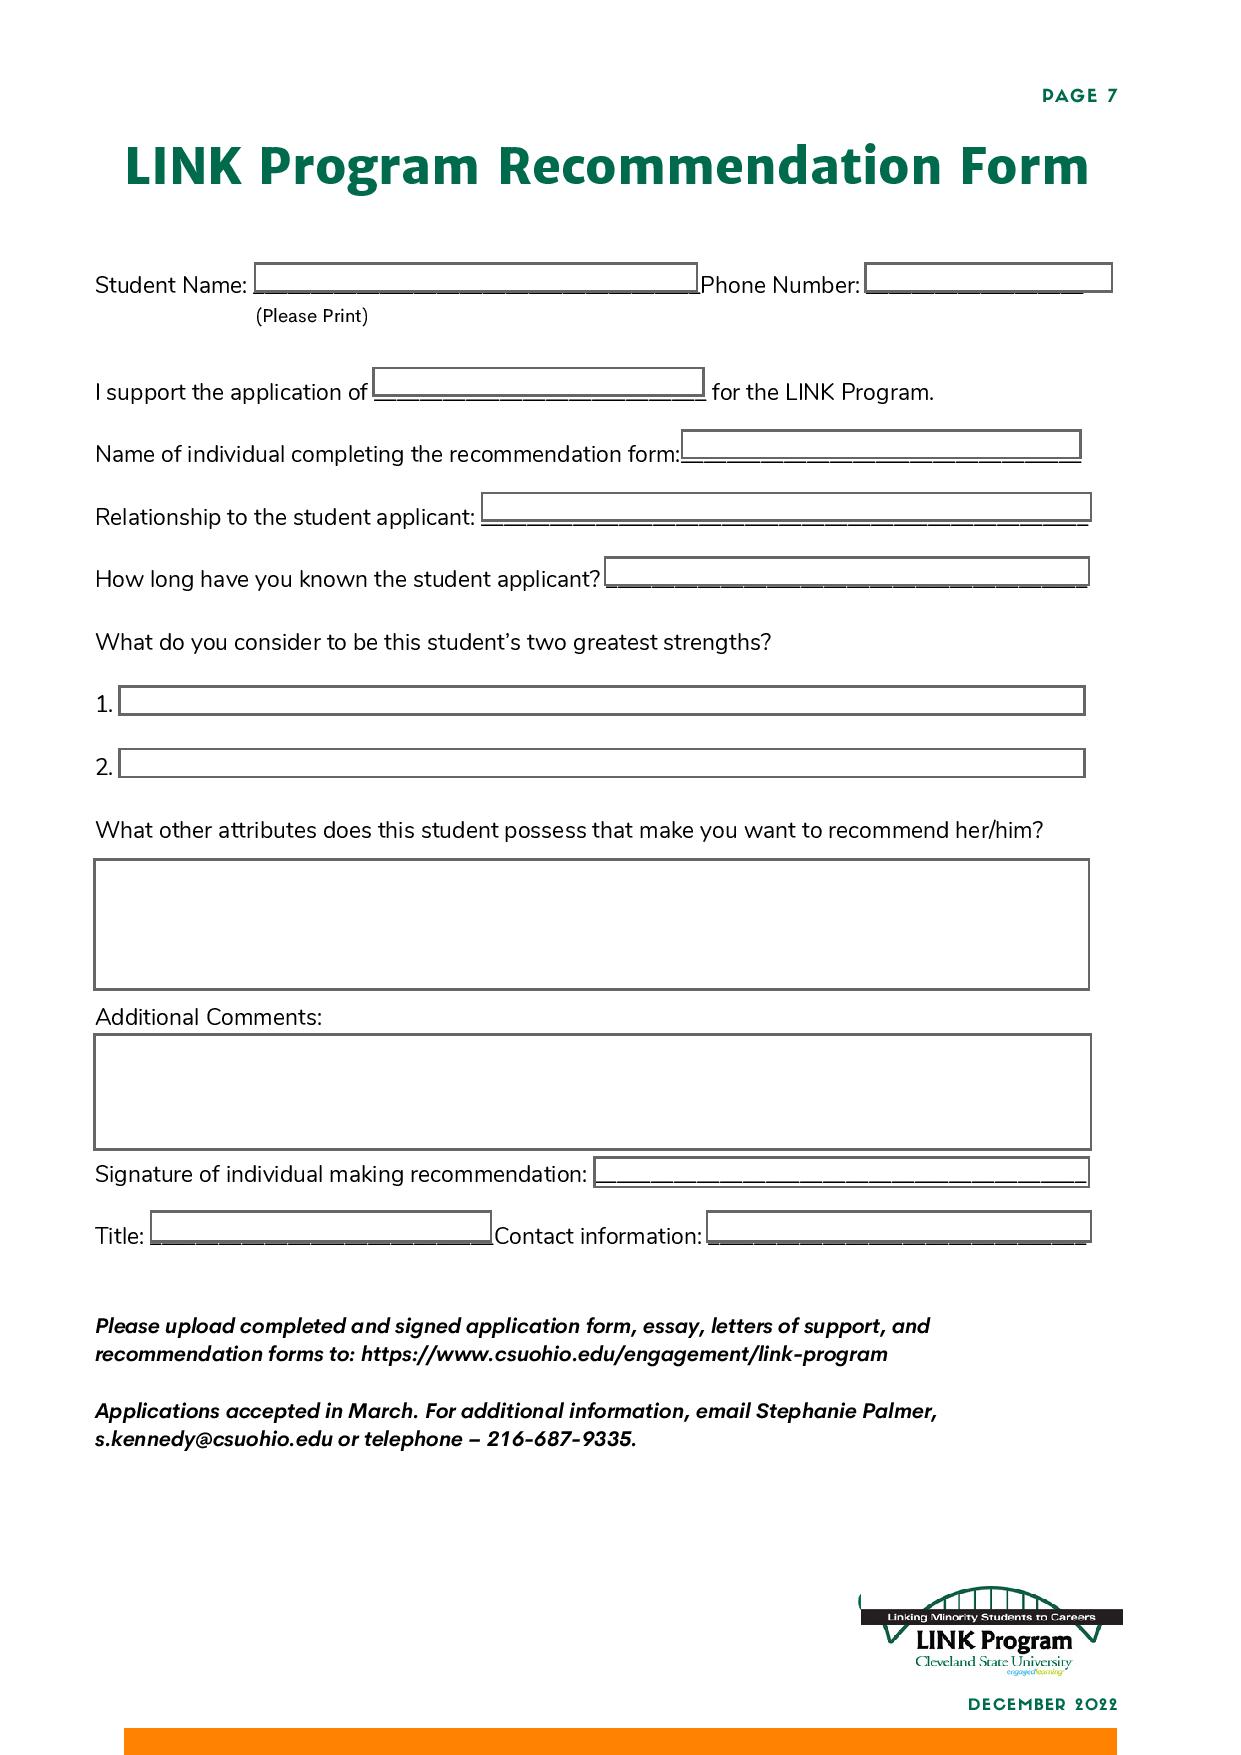 LINK recommendation form